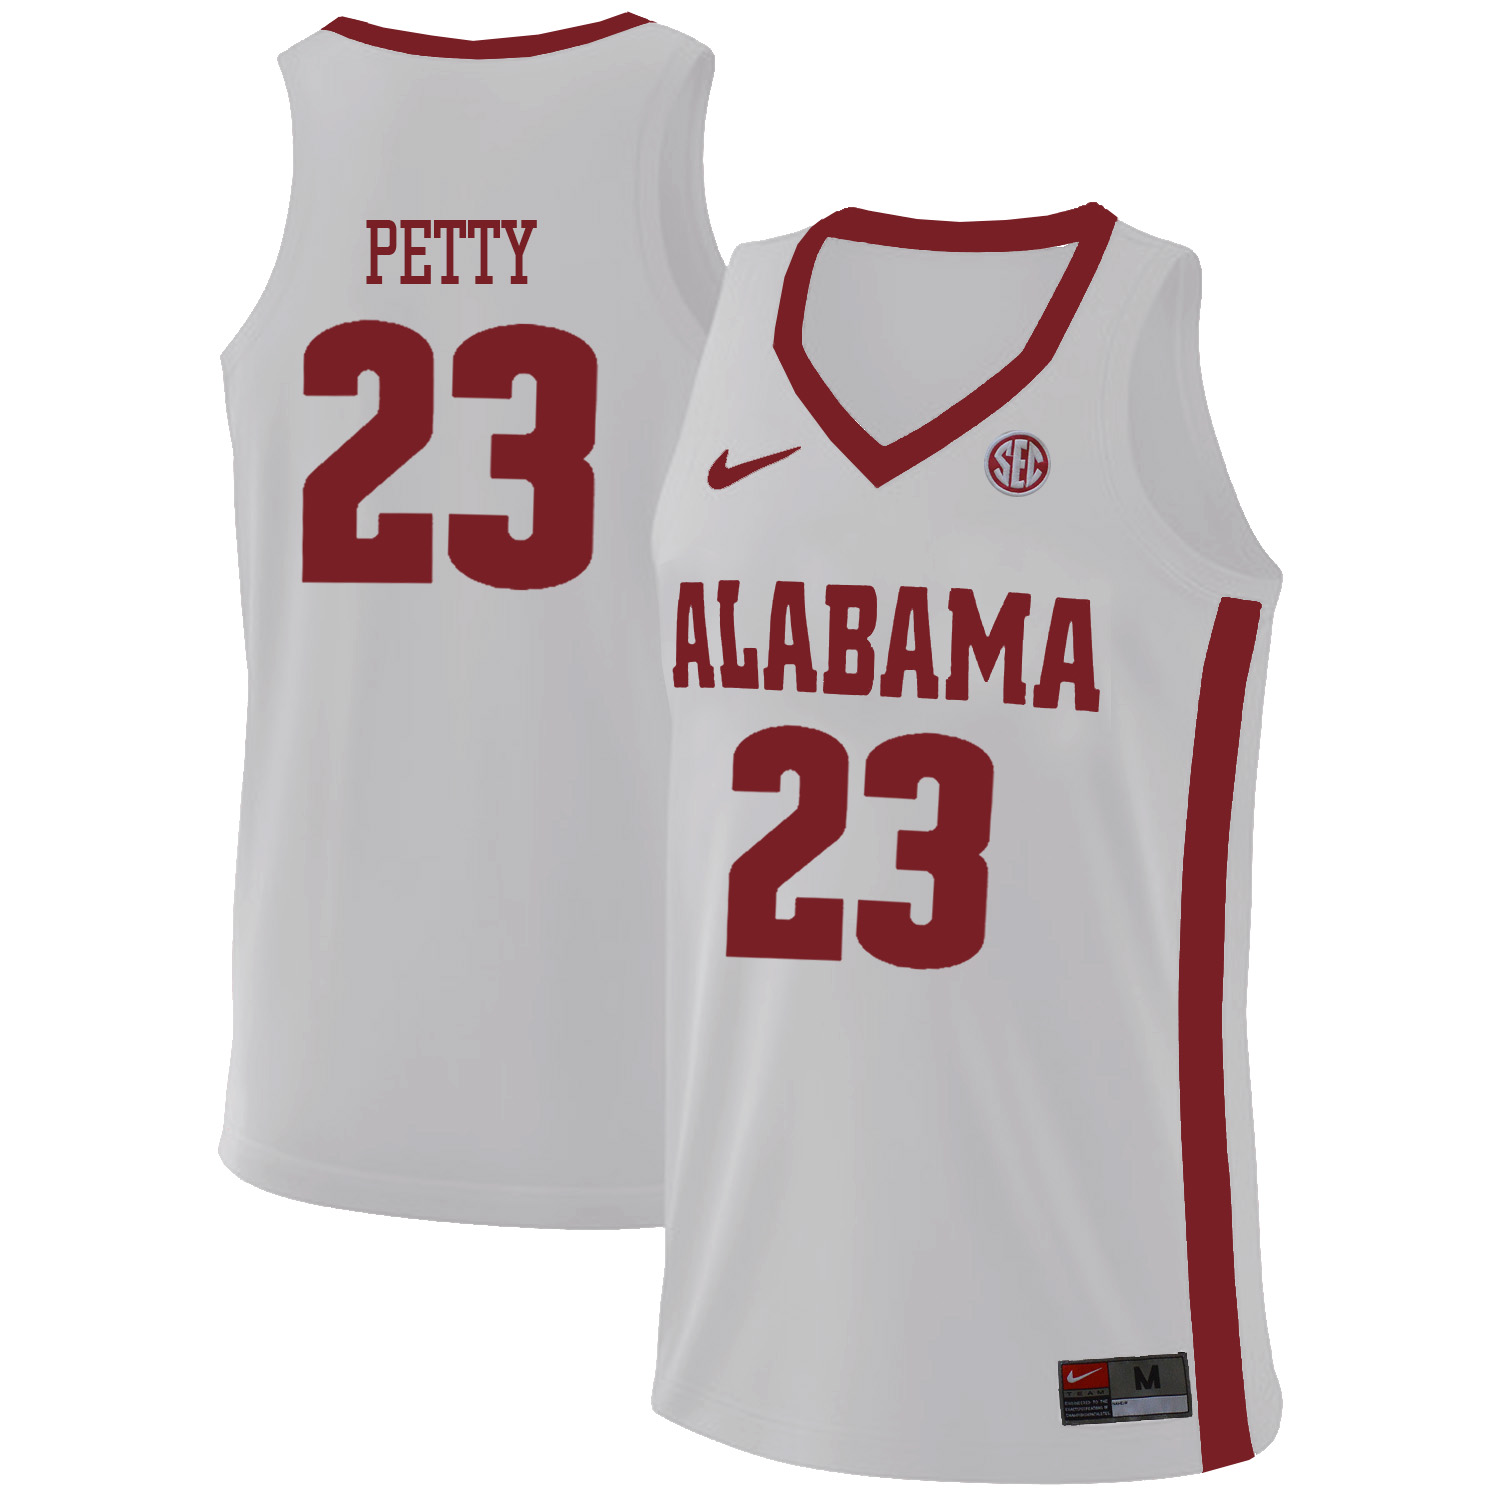 Alabama Crimson Tide 23 John Petty White College Basketball Jersey